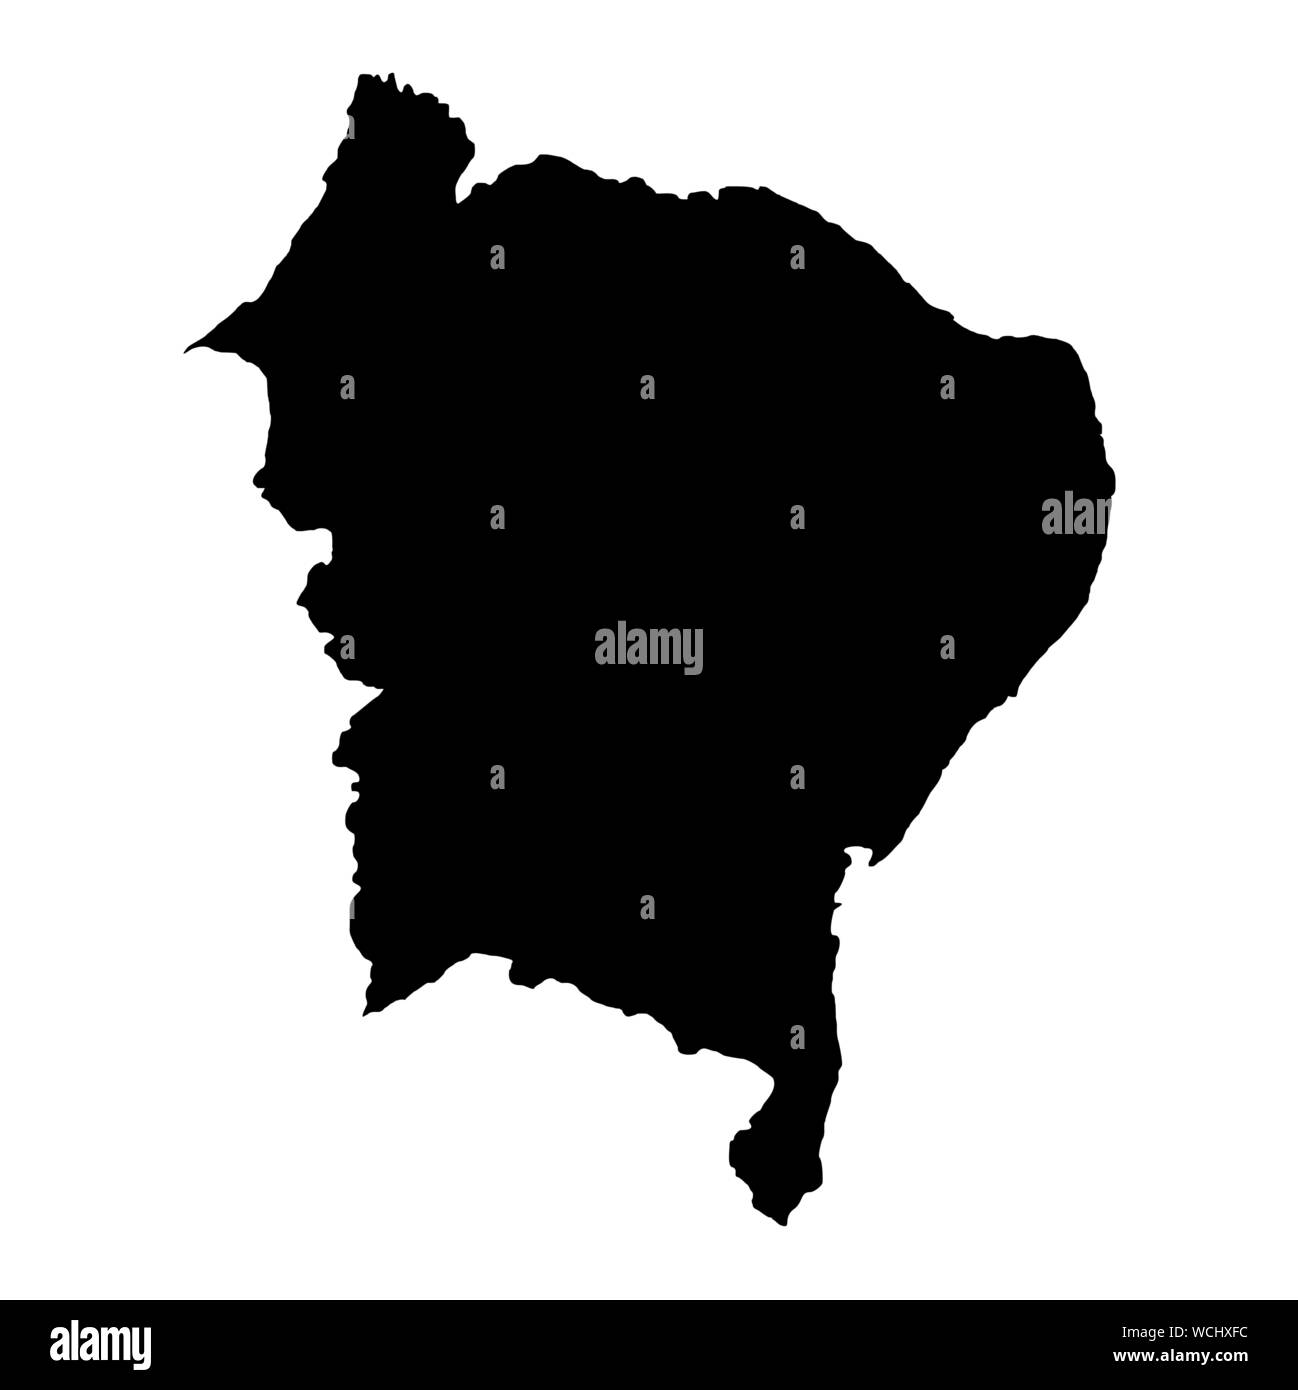 Brazil Northeast silhouette map Stock Vector